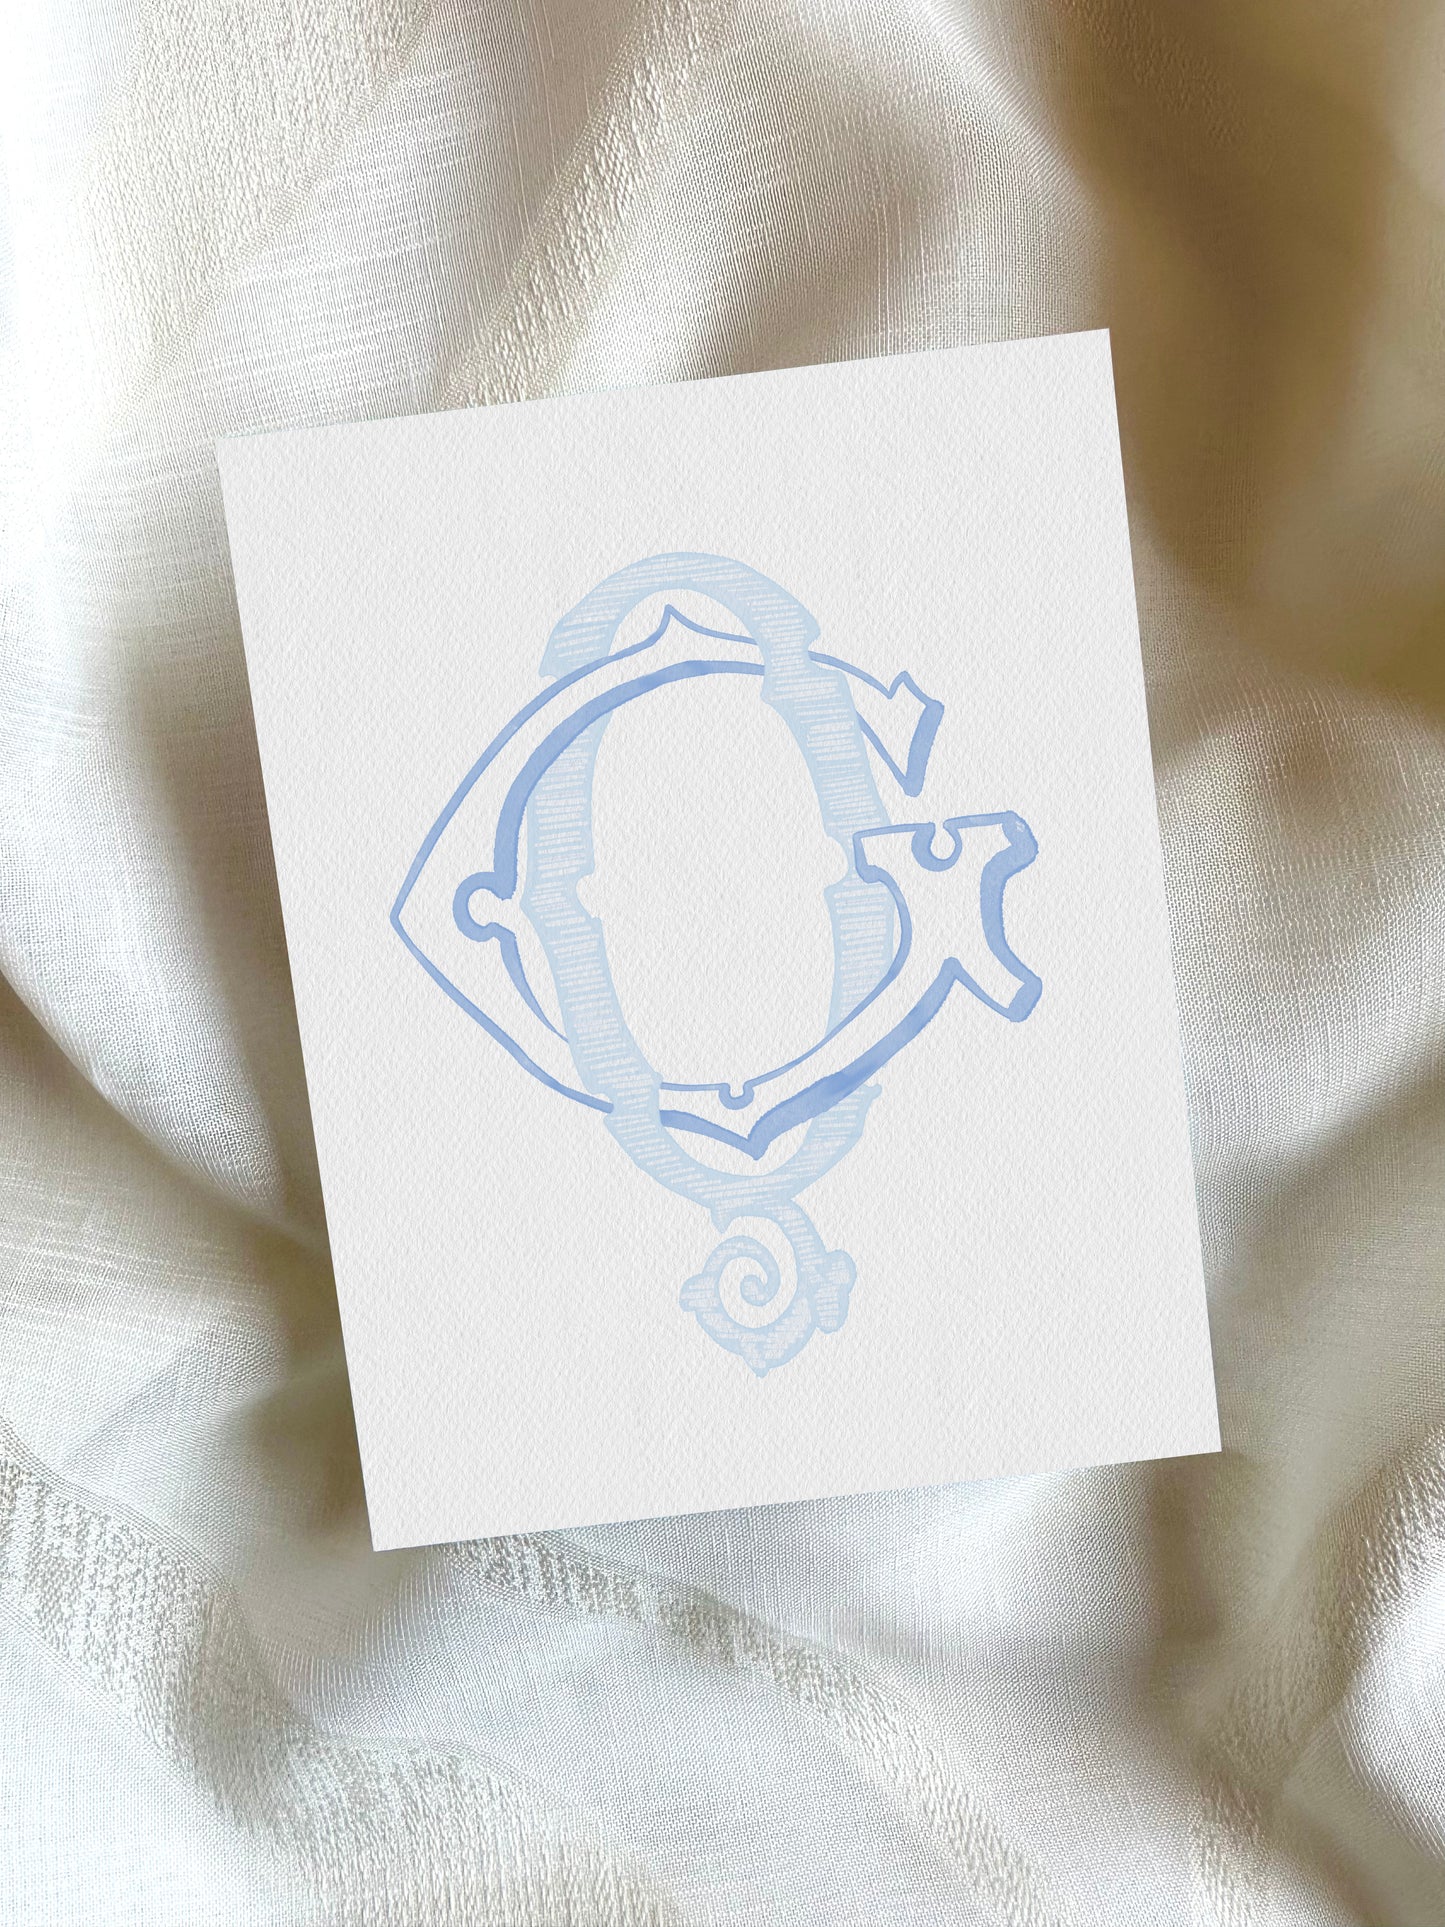 2 Letter Monogram with Letters GQ QG | Digital Download - Wedding Monogram SVG, Personal Logo, Wedding Logo for Wedding Invitations The Wedding Crest Lab